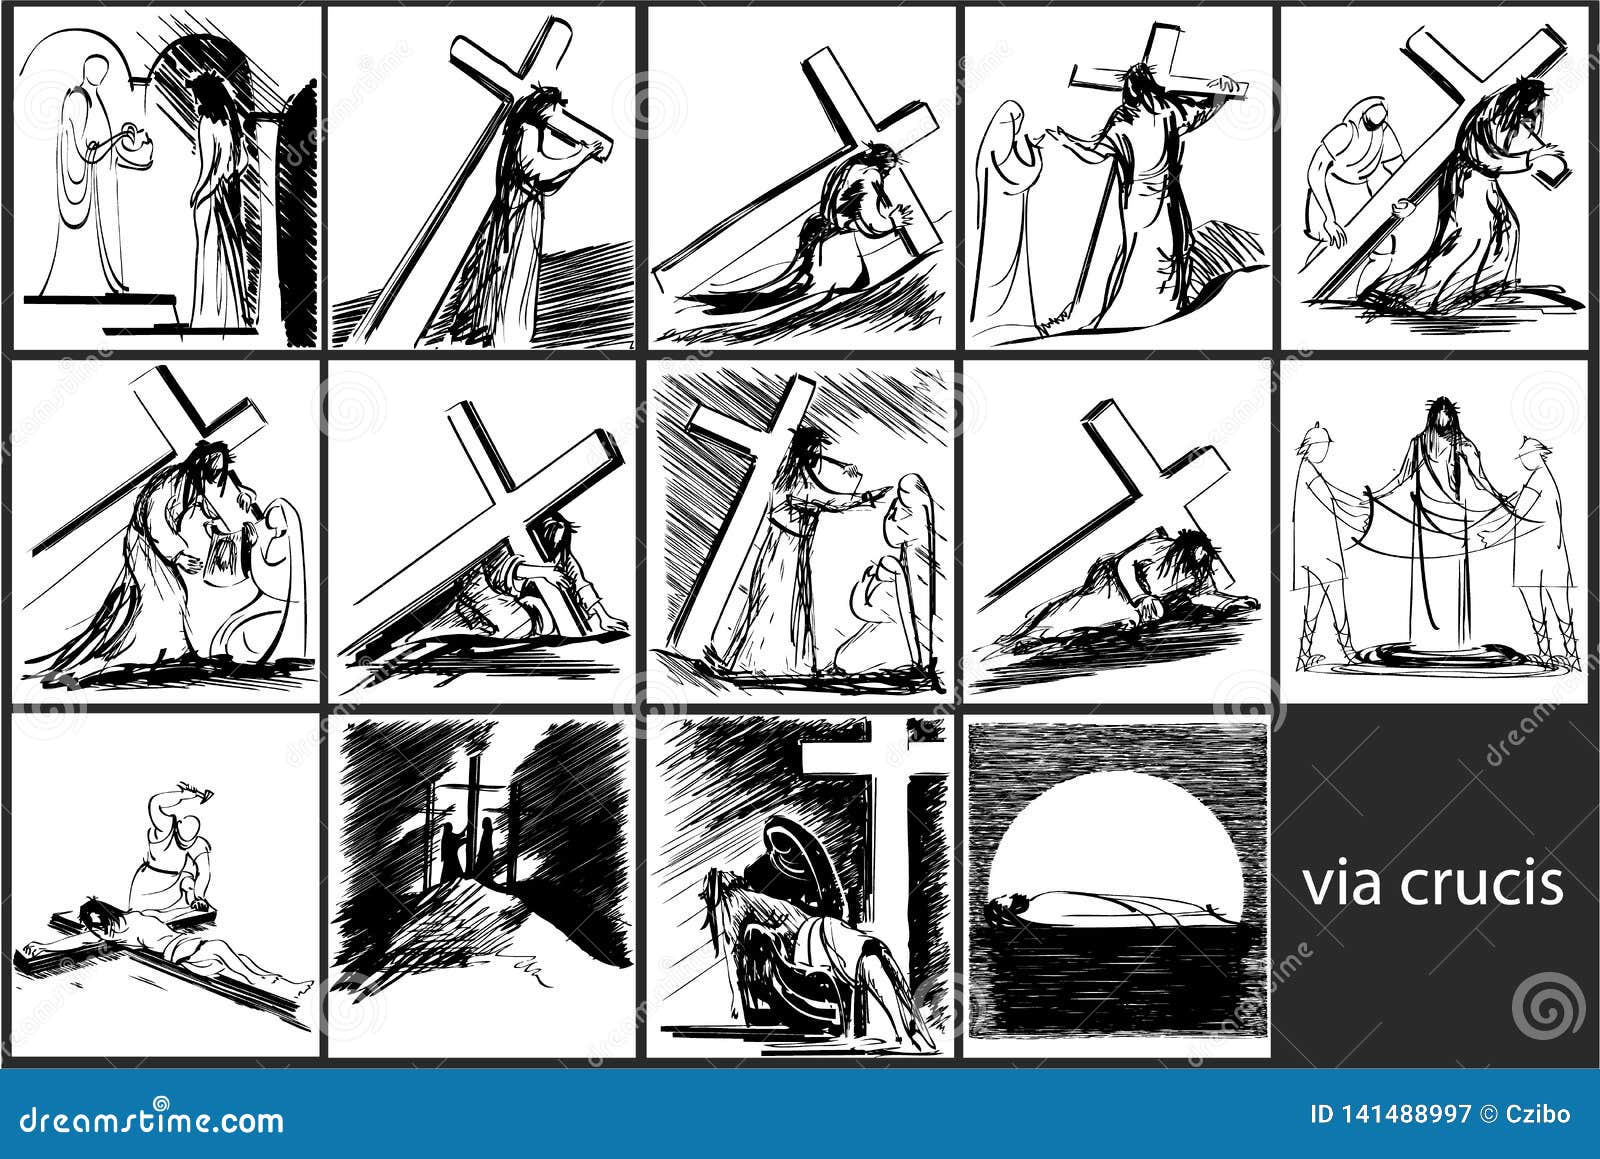 Via crucis stock illustrations â via crucis stock illustrations vectors clipart